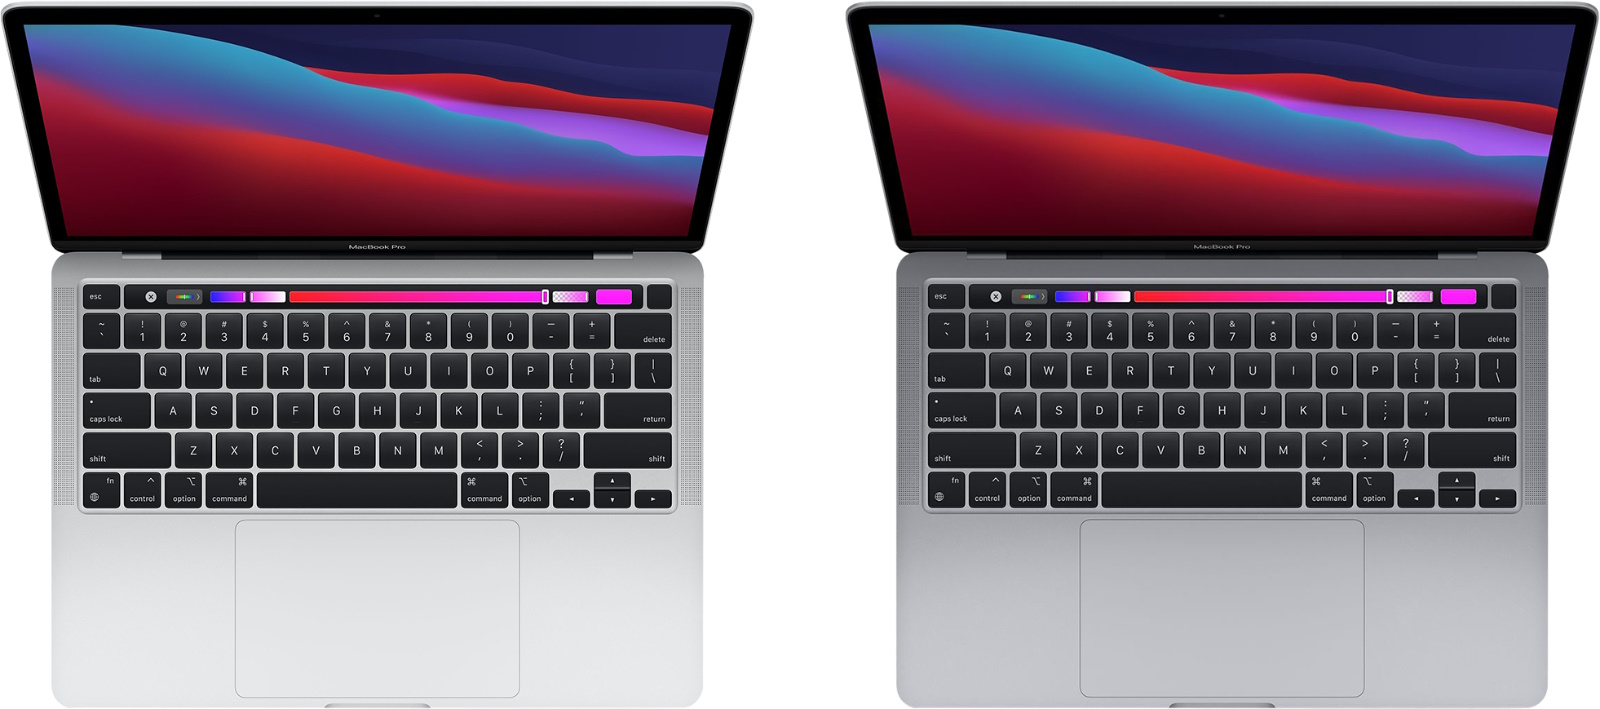  macbook pro 13 inch m1 2020